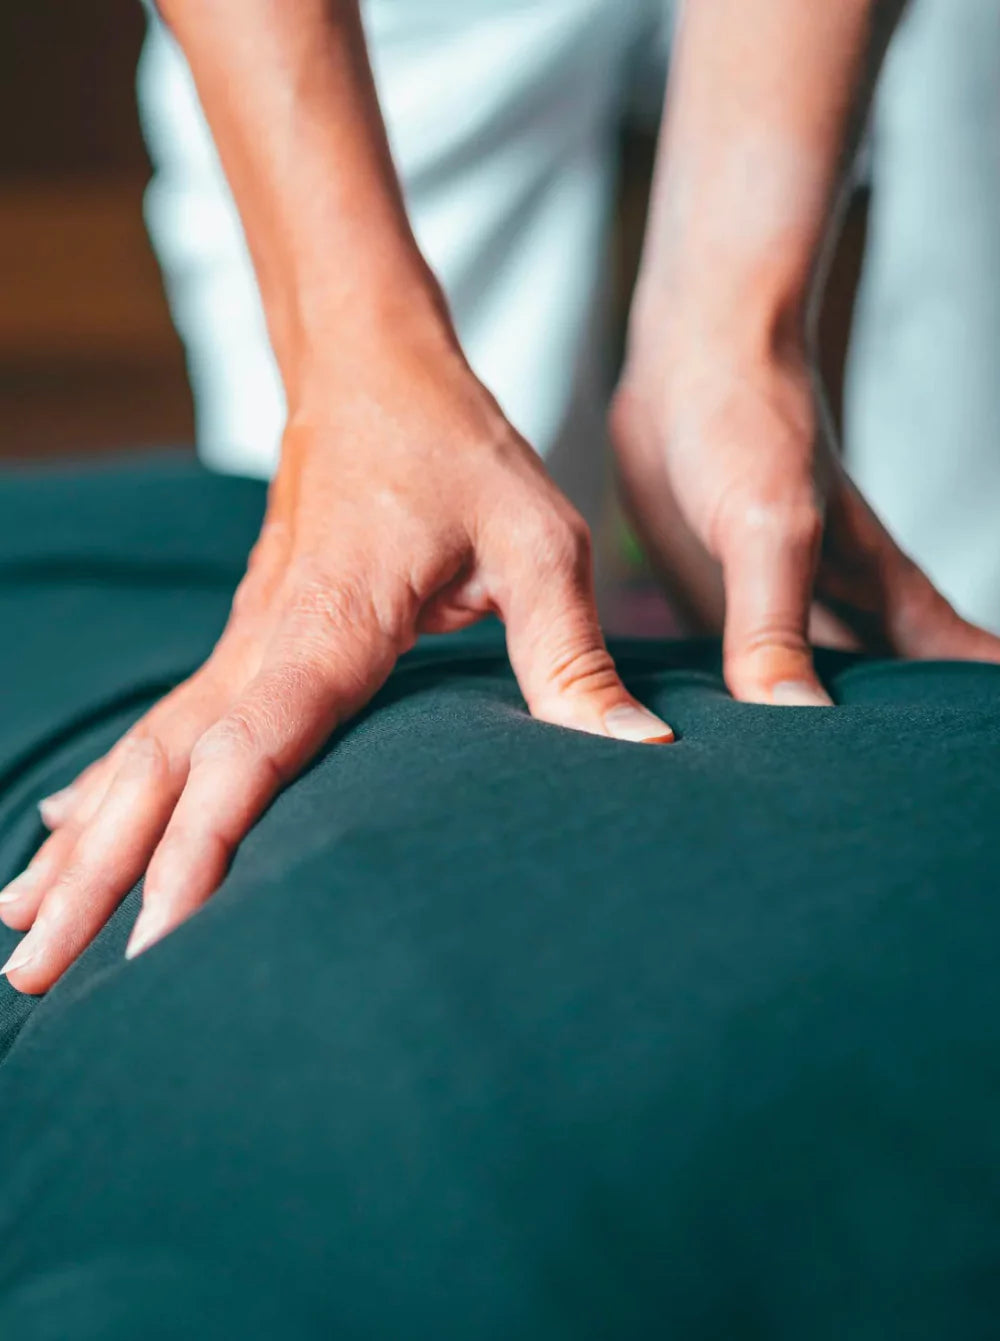 Massage increases range of motion